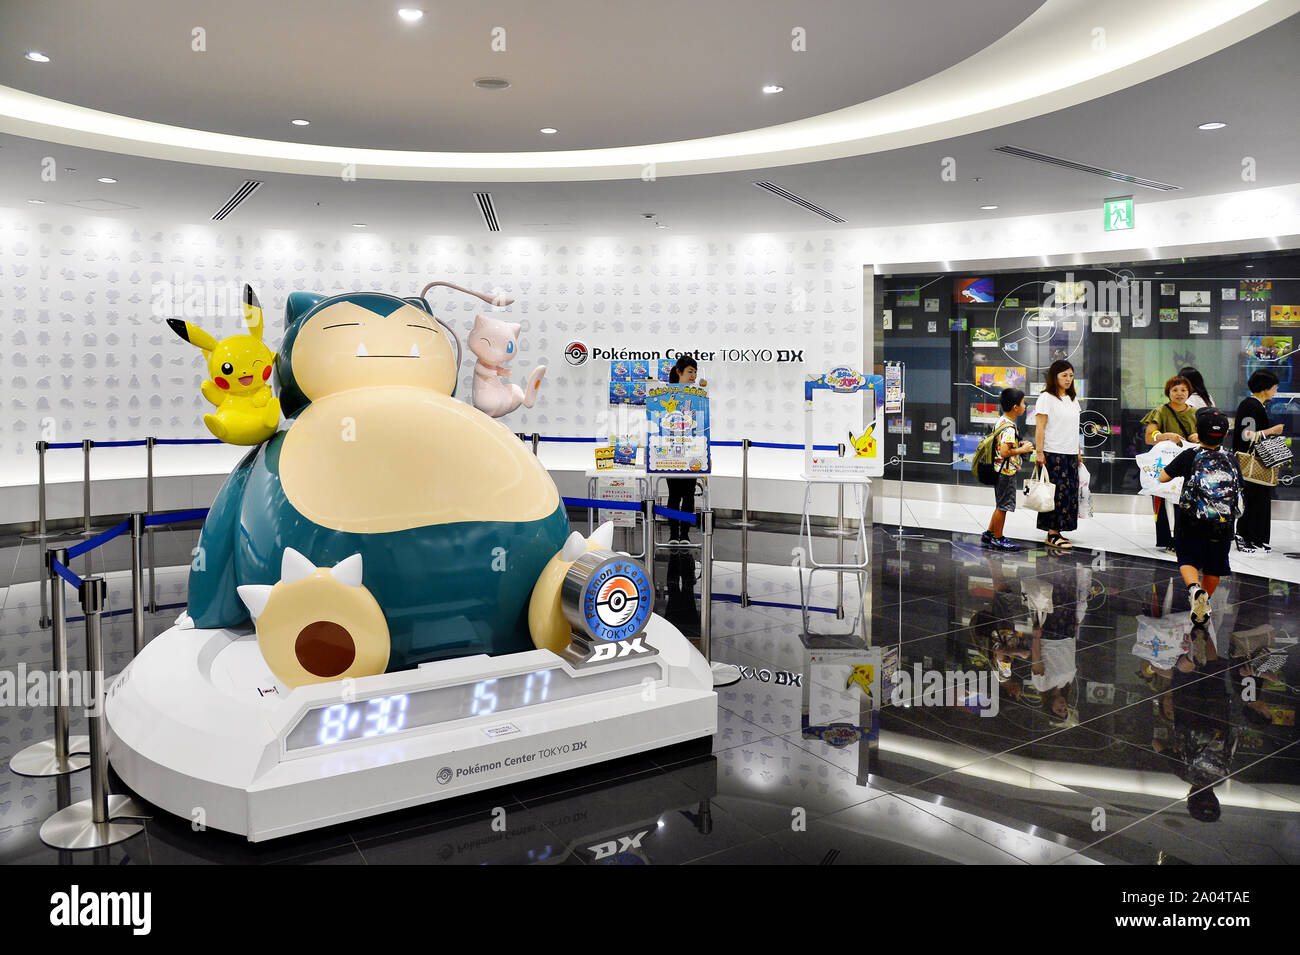 Pokemon Center Tokyo DX foyer by StealthCat15 on DeviantArt